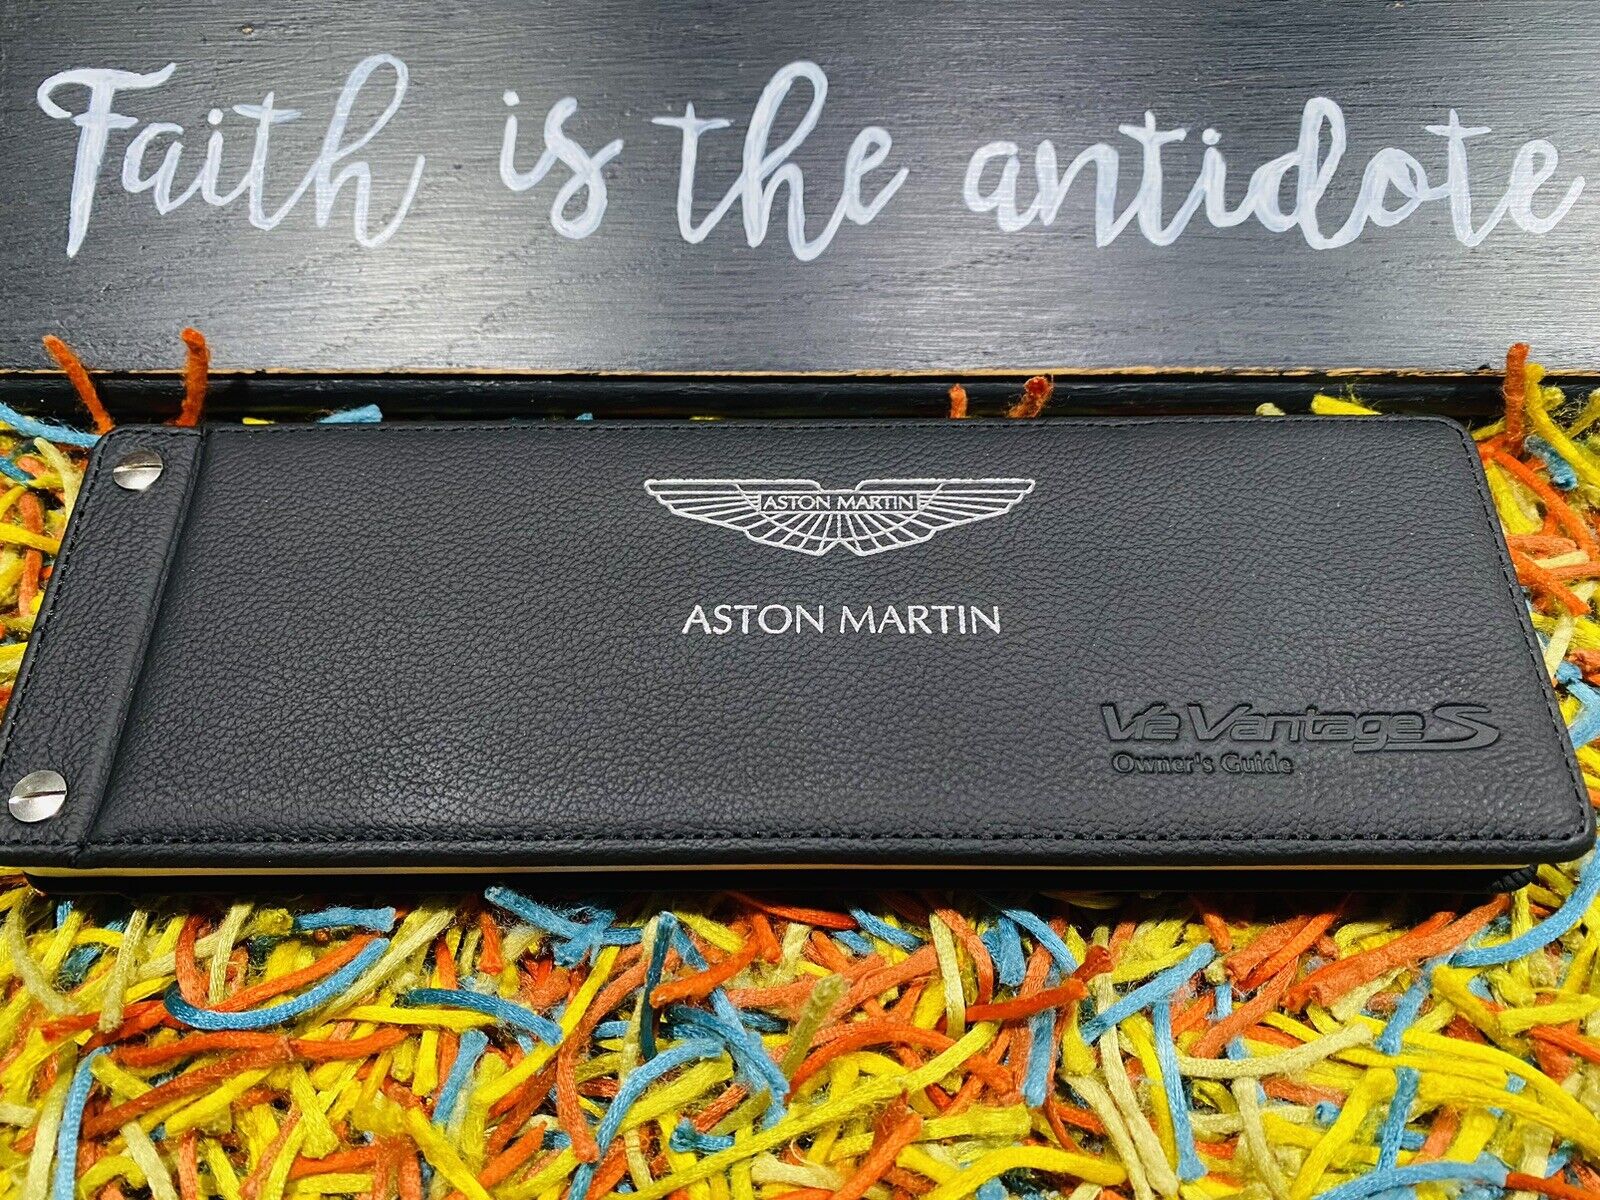 2015 2014 ASTON MARTIN V12 VANTAGE S OWNERS MANUAL + NAVIGATION INFO + SERVICE